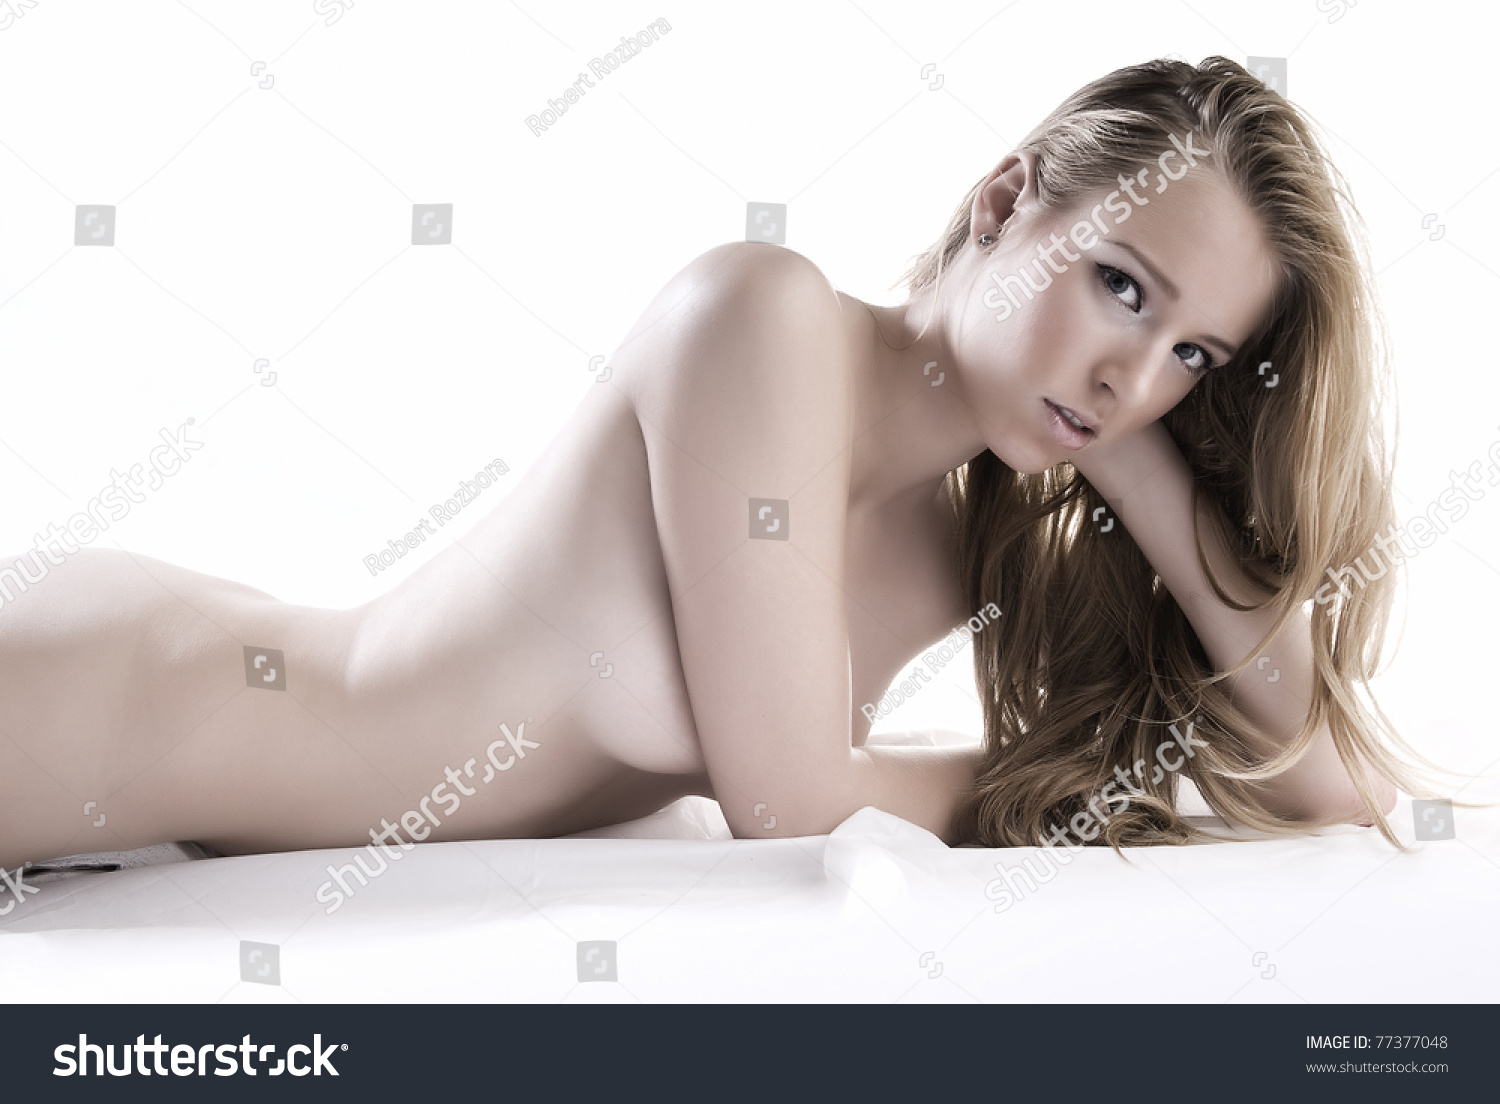 porno position